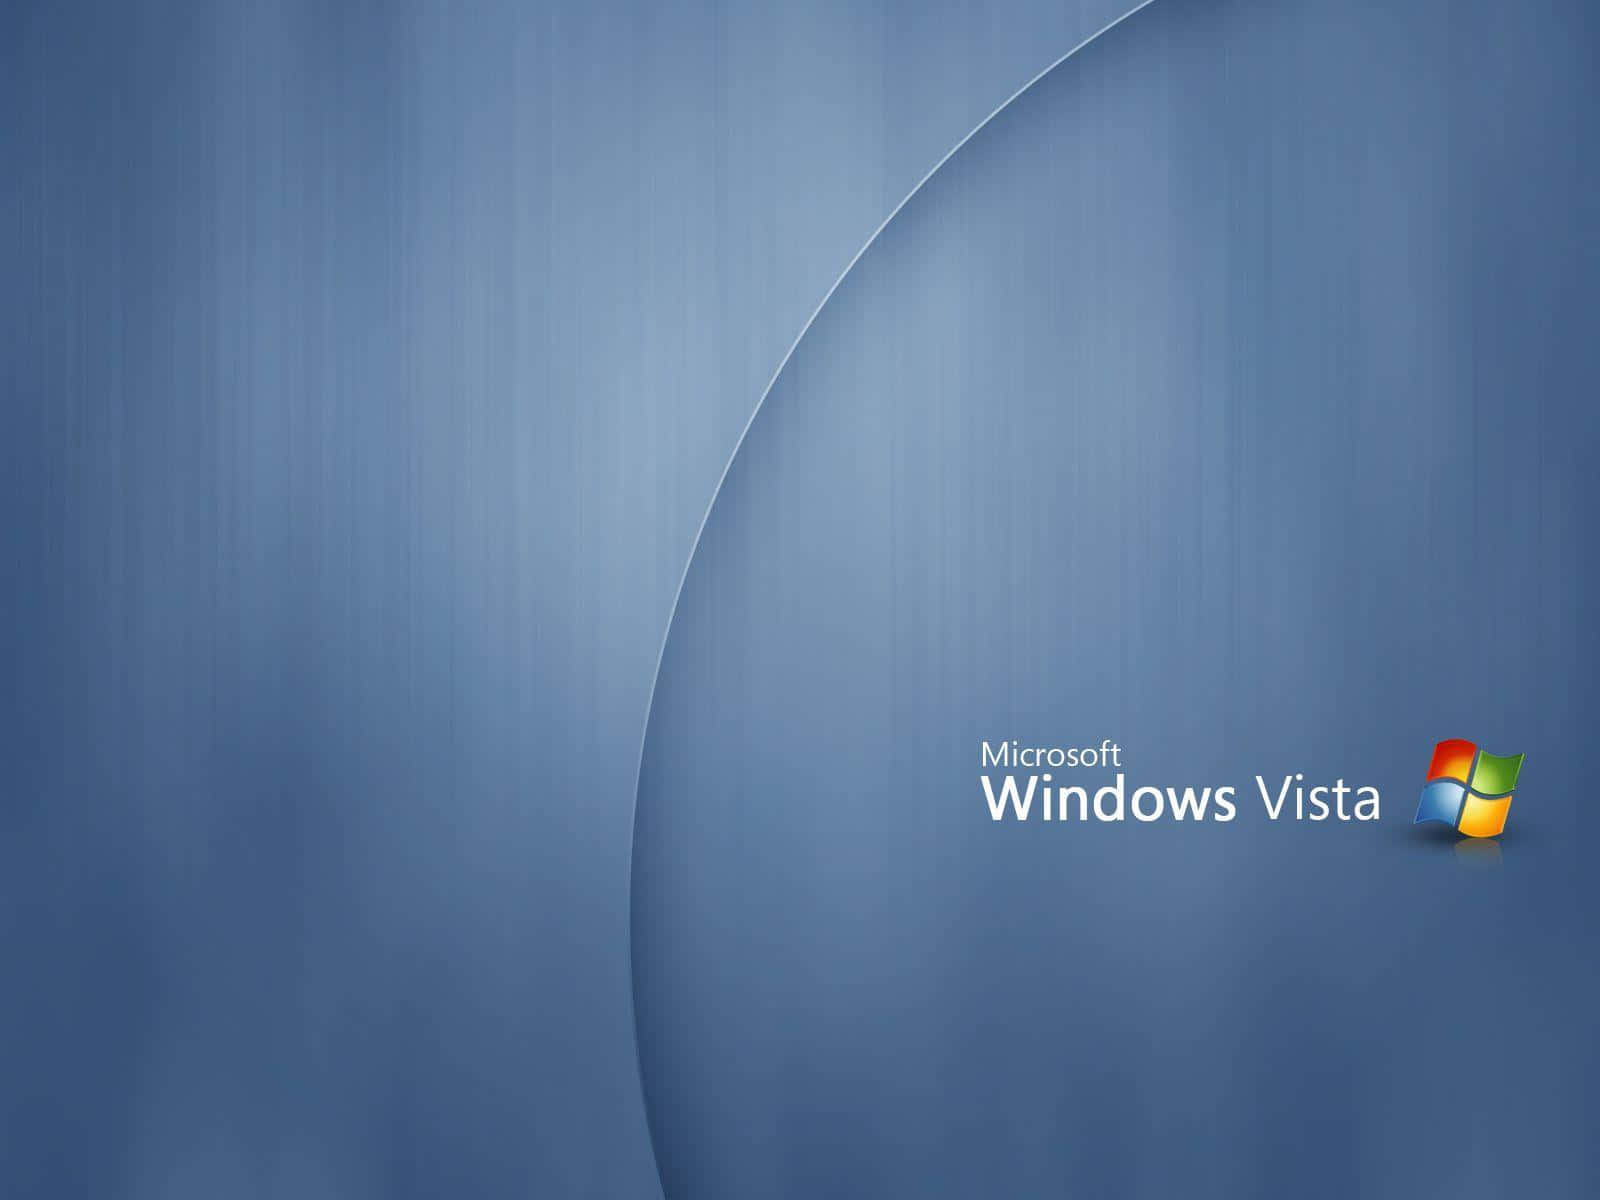 Windows Vista is Here to Transform Your Desktop